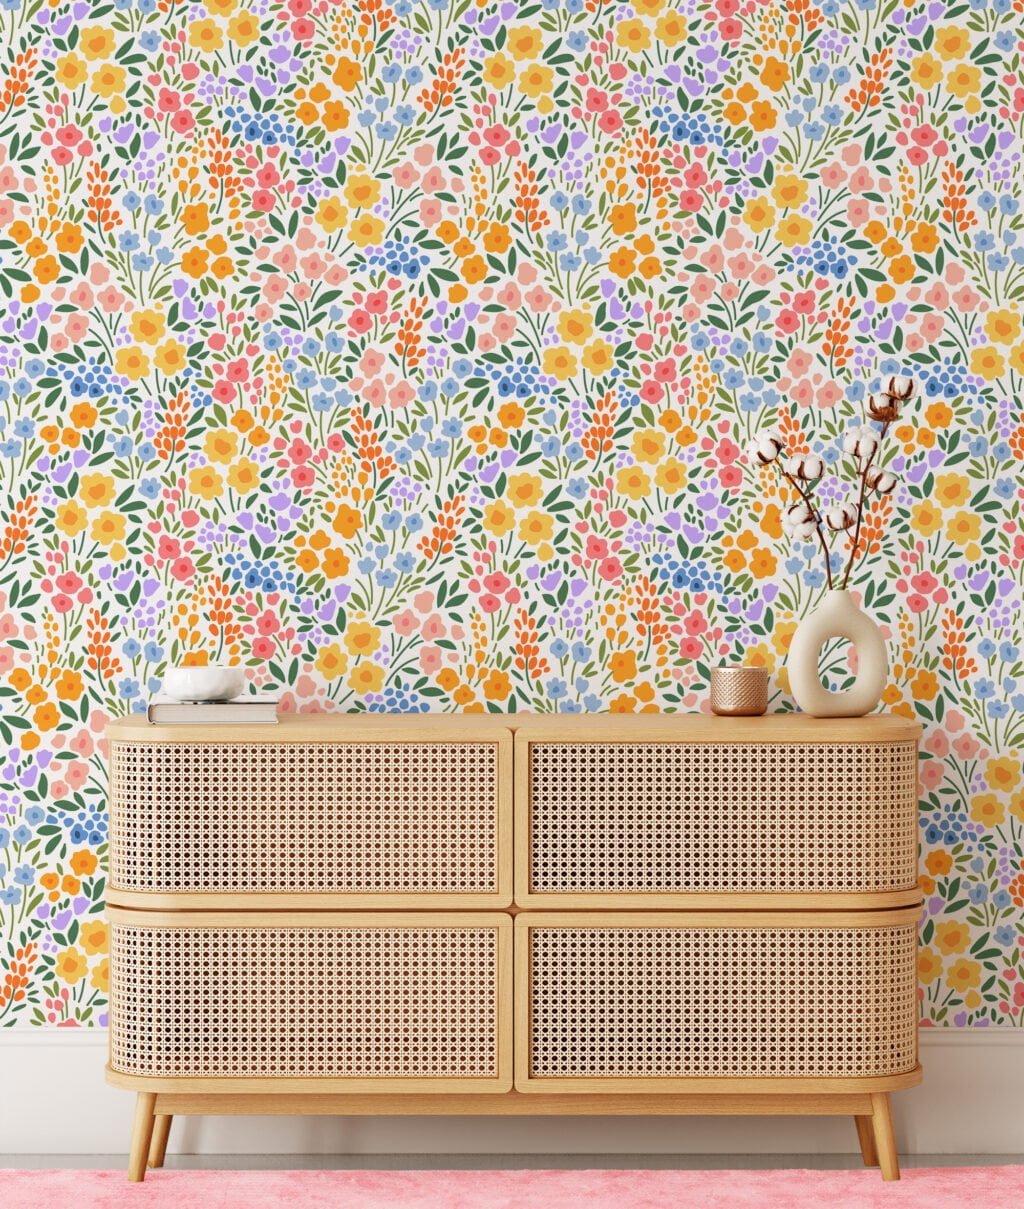 Flat Art Colorful Small Flower Pattern Illustration Wallpaper, Vibrant Floral Garden Peel & Stick Wall Mural